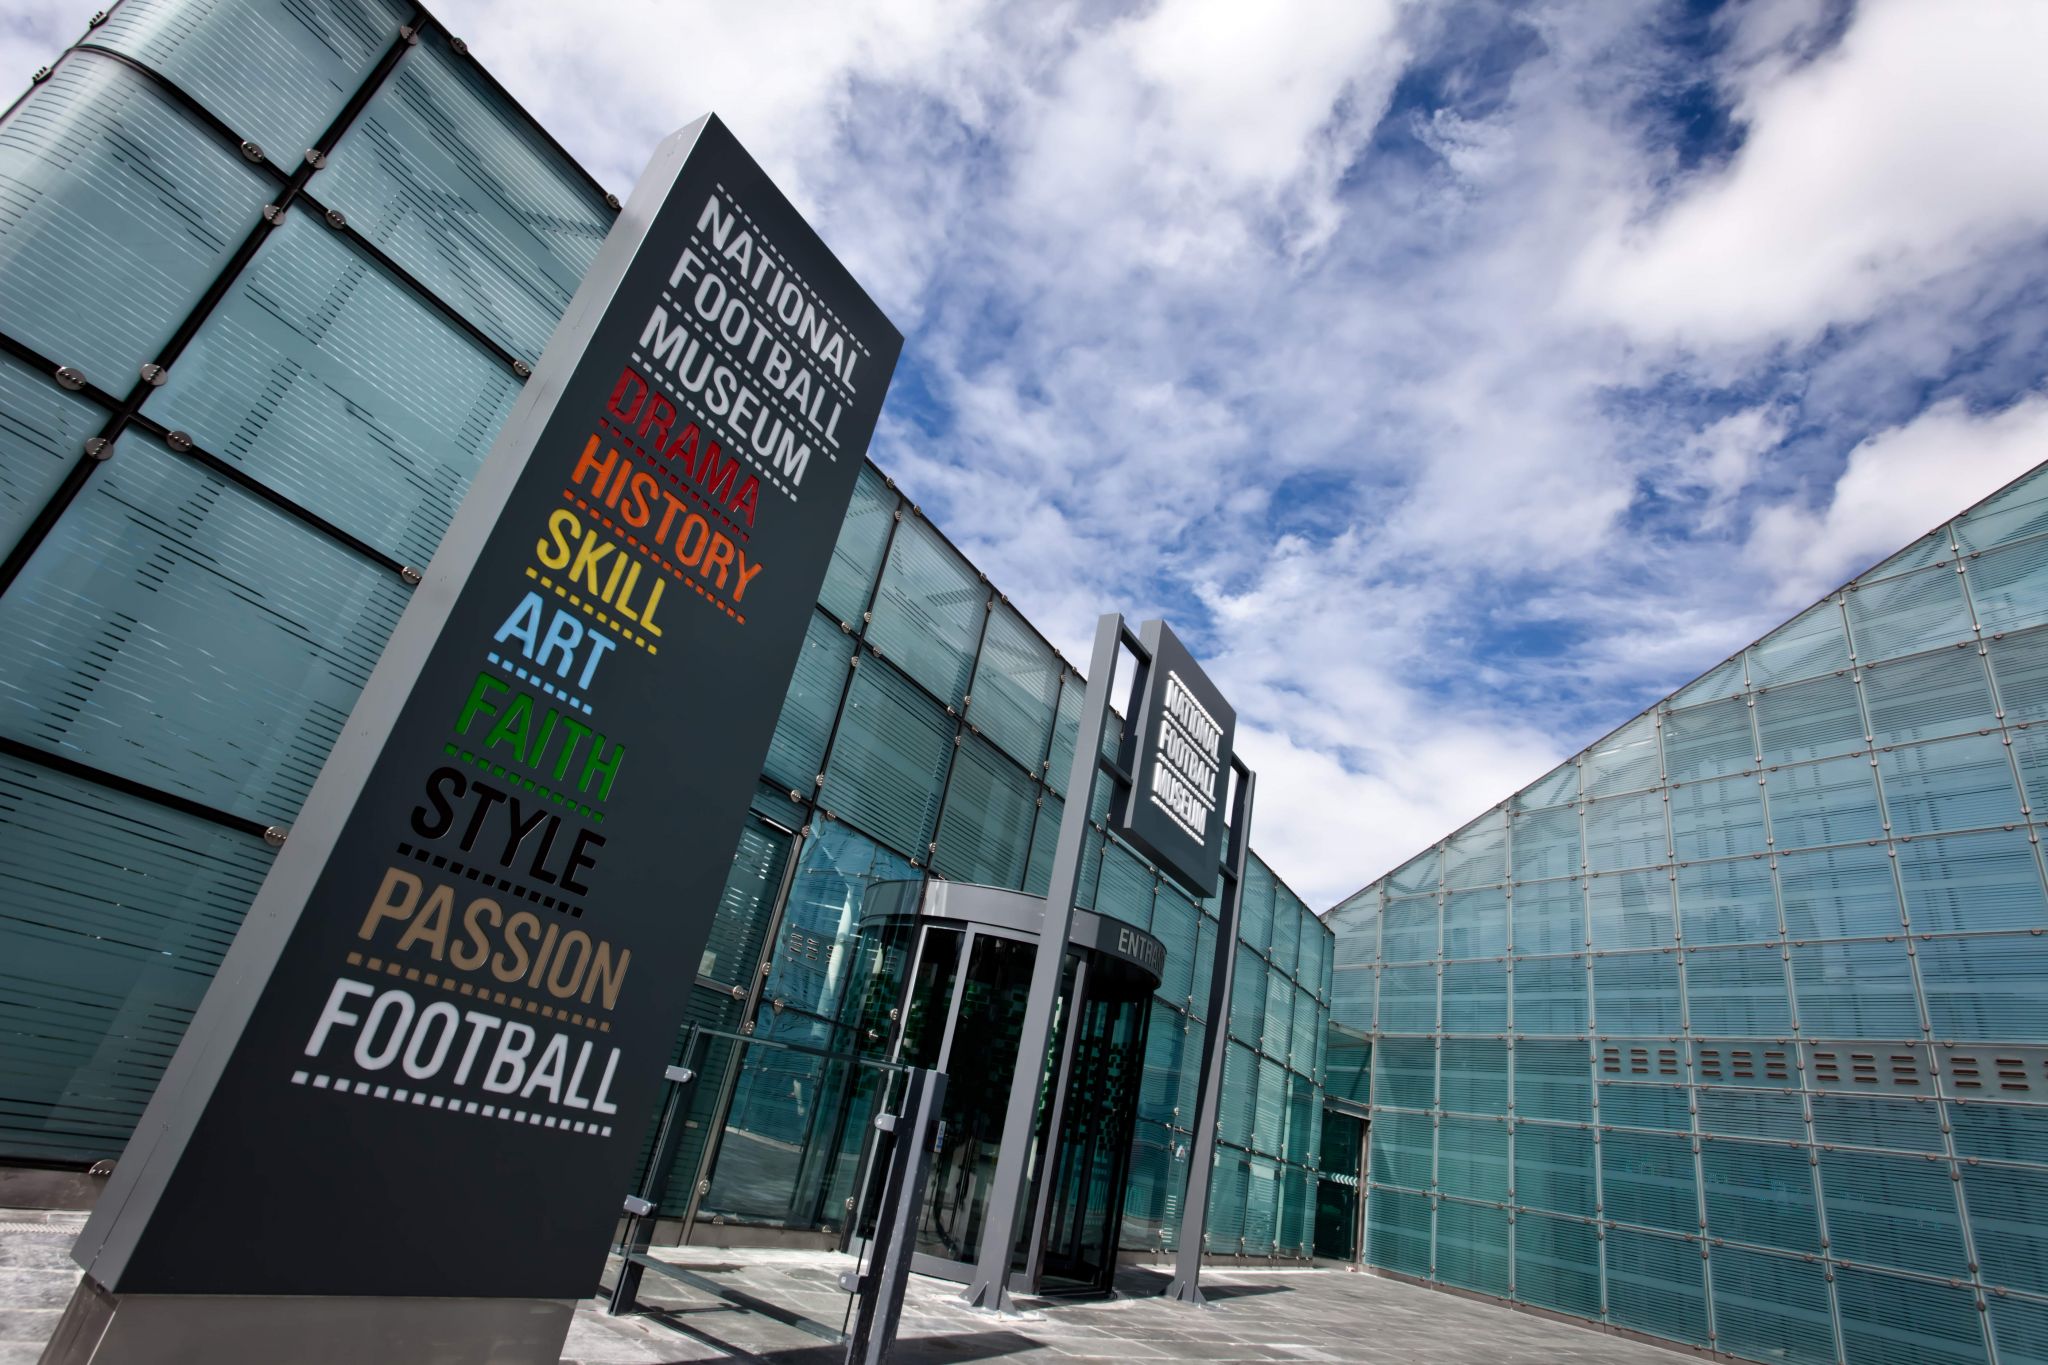 National Football Museum, Manchester